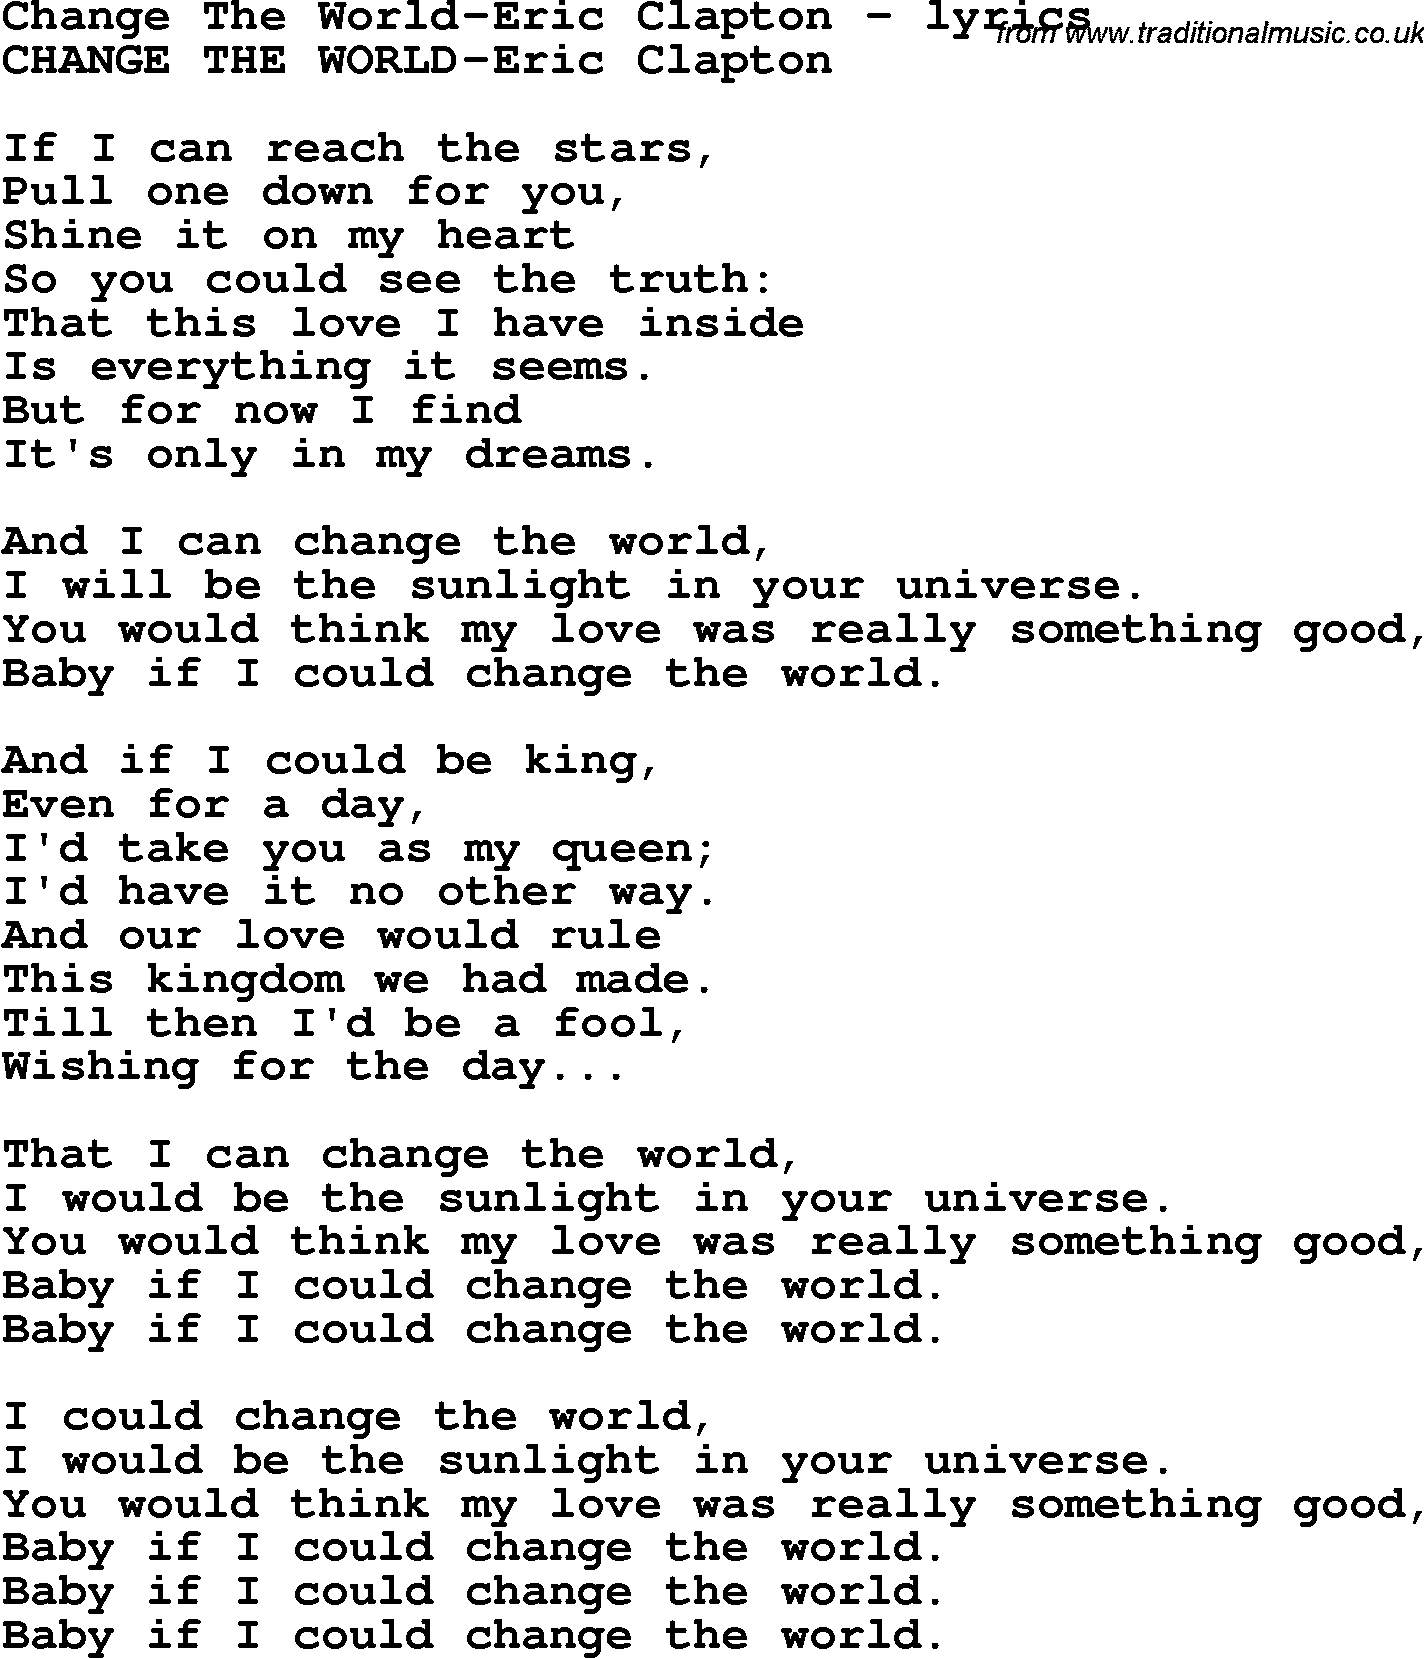 Love Song Lyrics for: Change The World-Eric Clapton